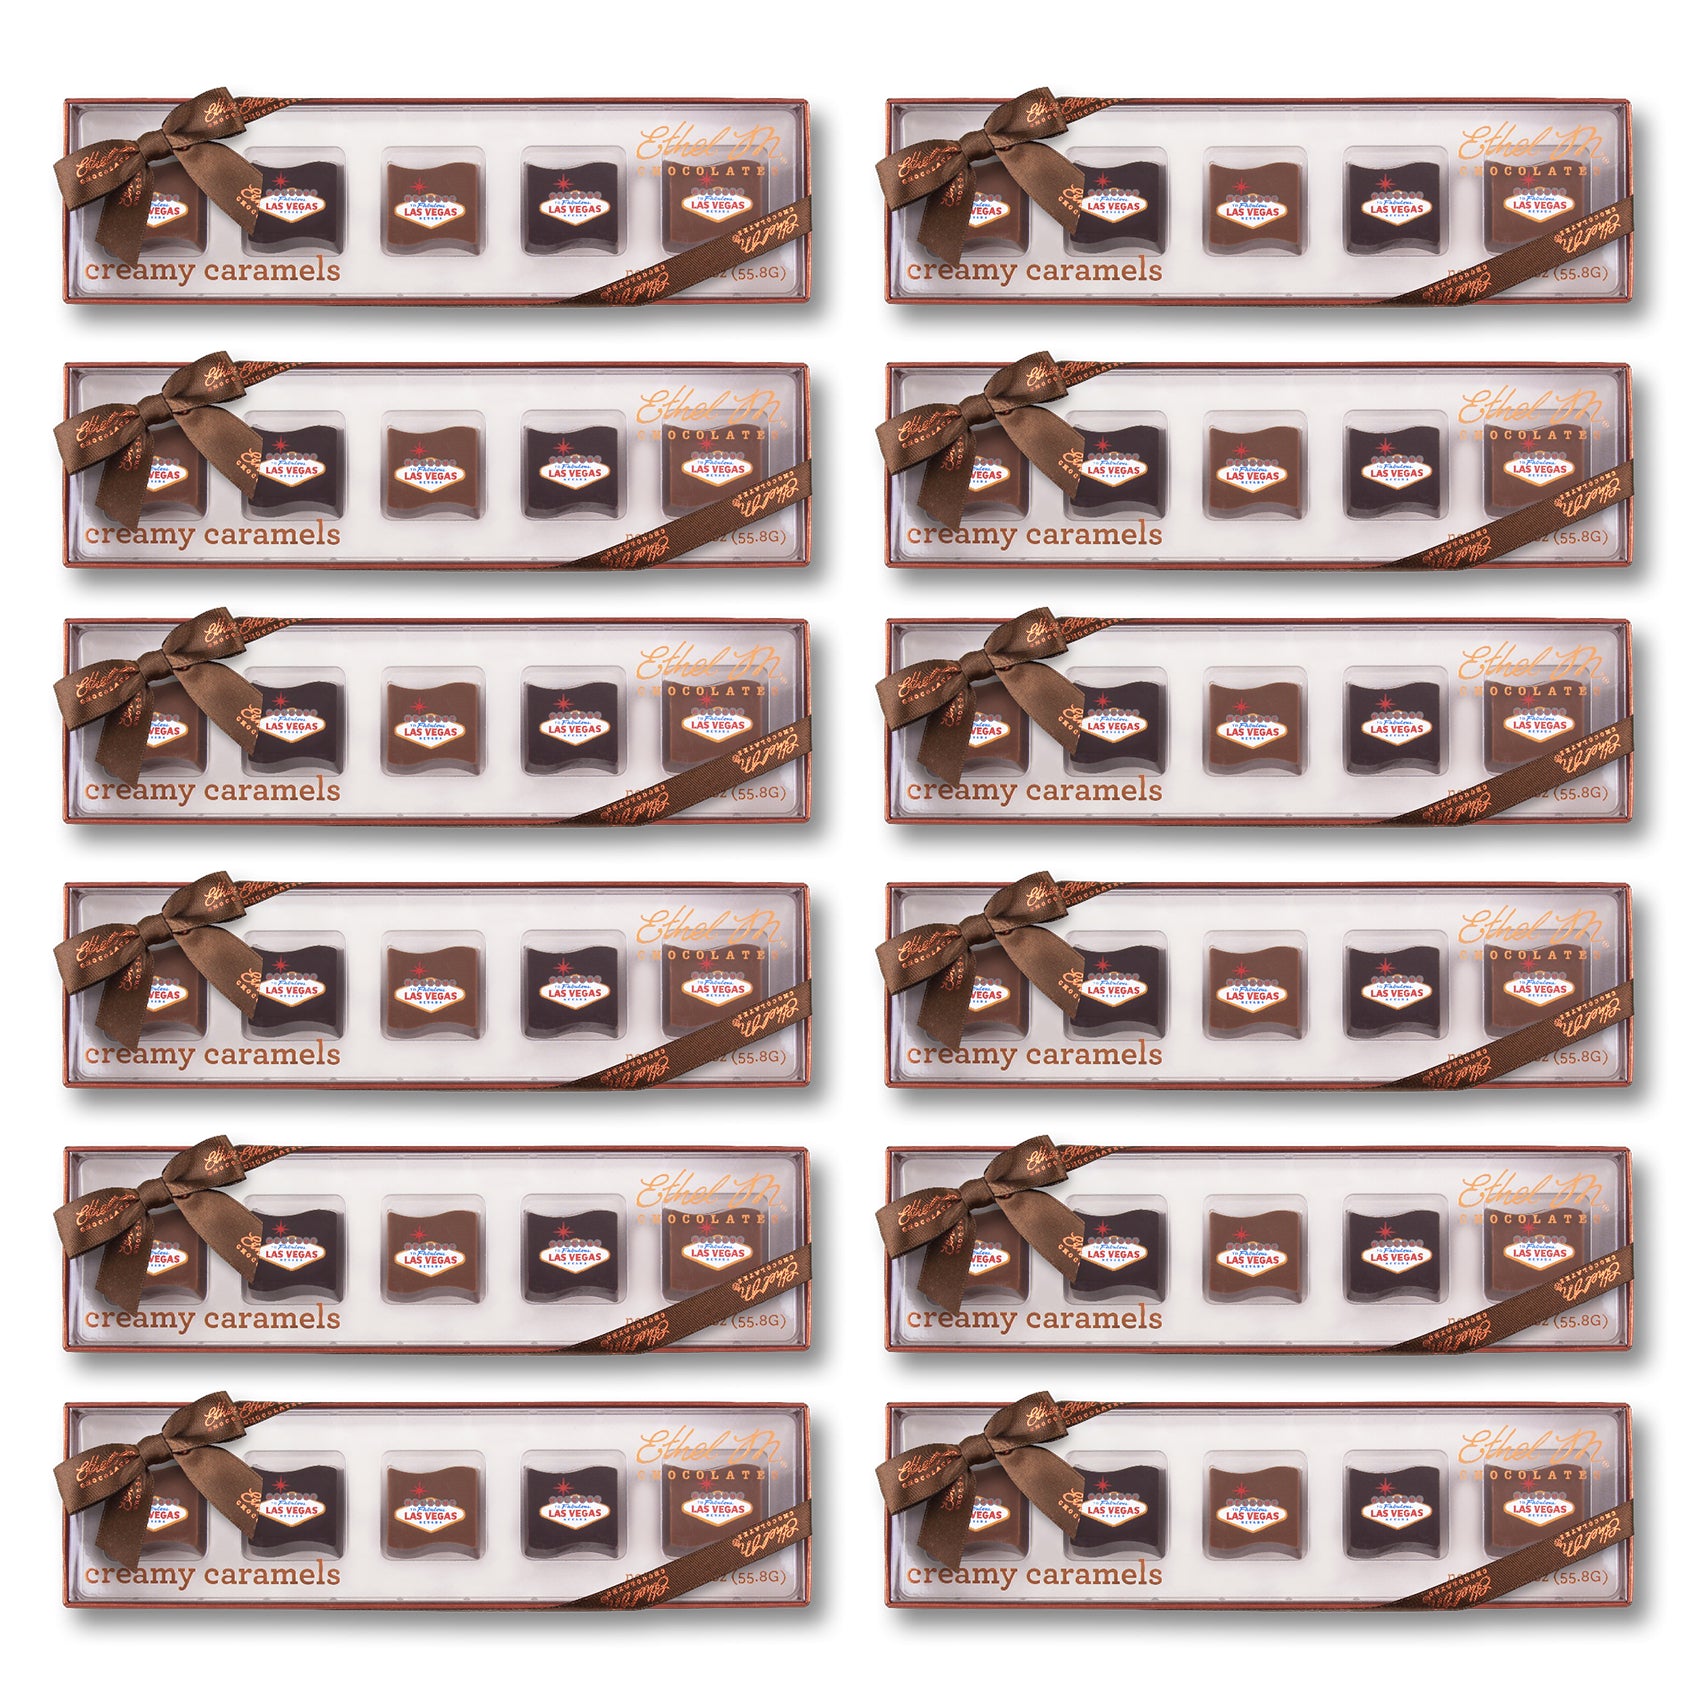 Ethel M Chocolates Taste of Las Vegas Creamy Caramels 5-Piece box of chocolate set of 12 boxes